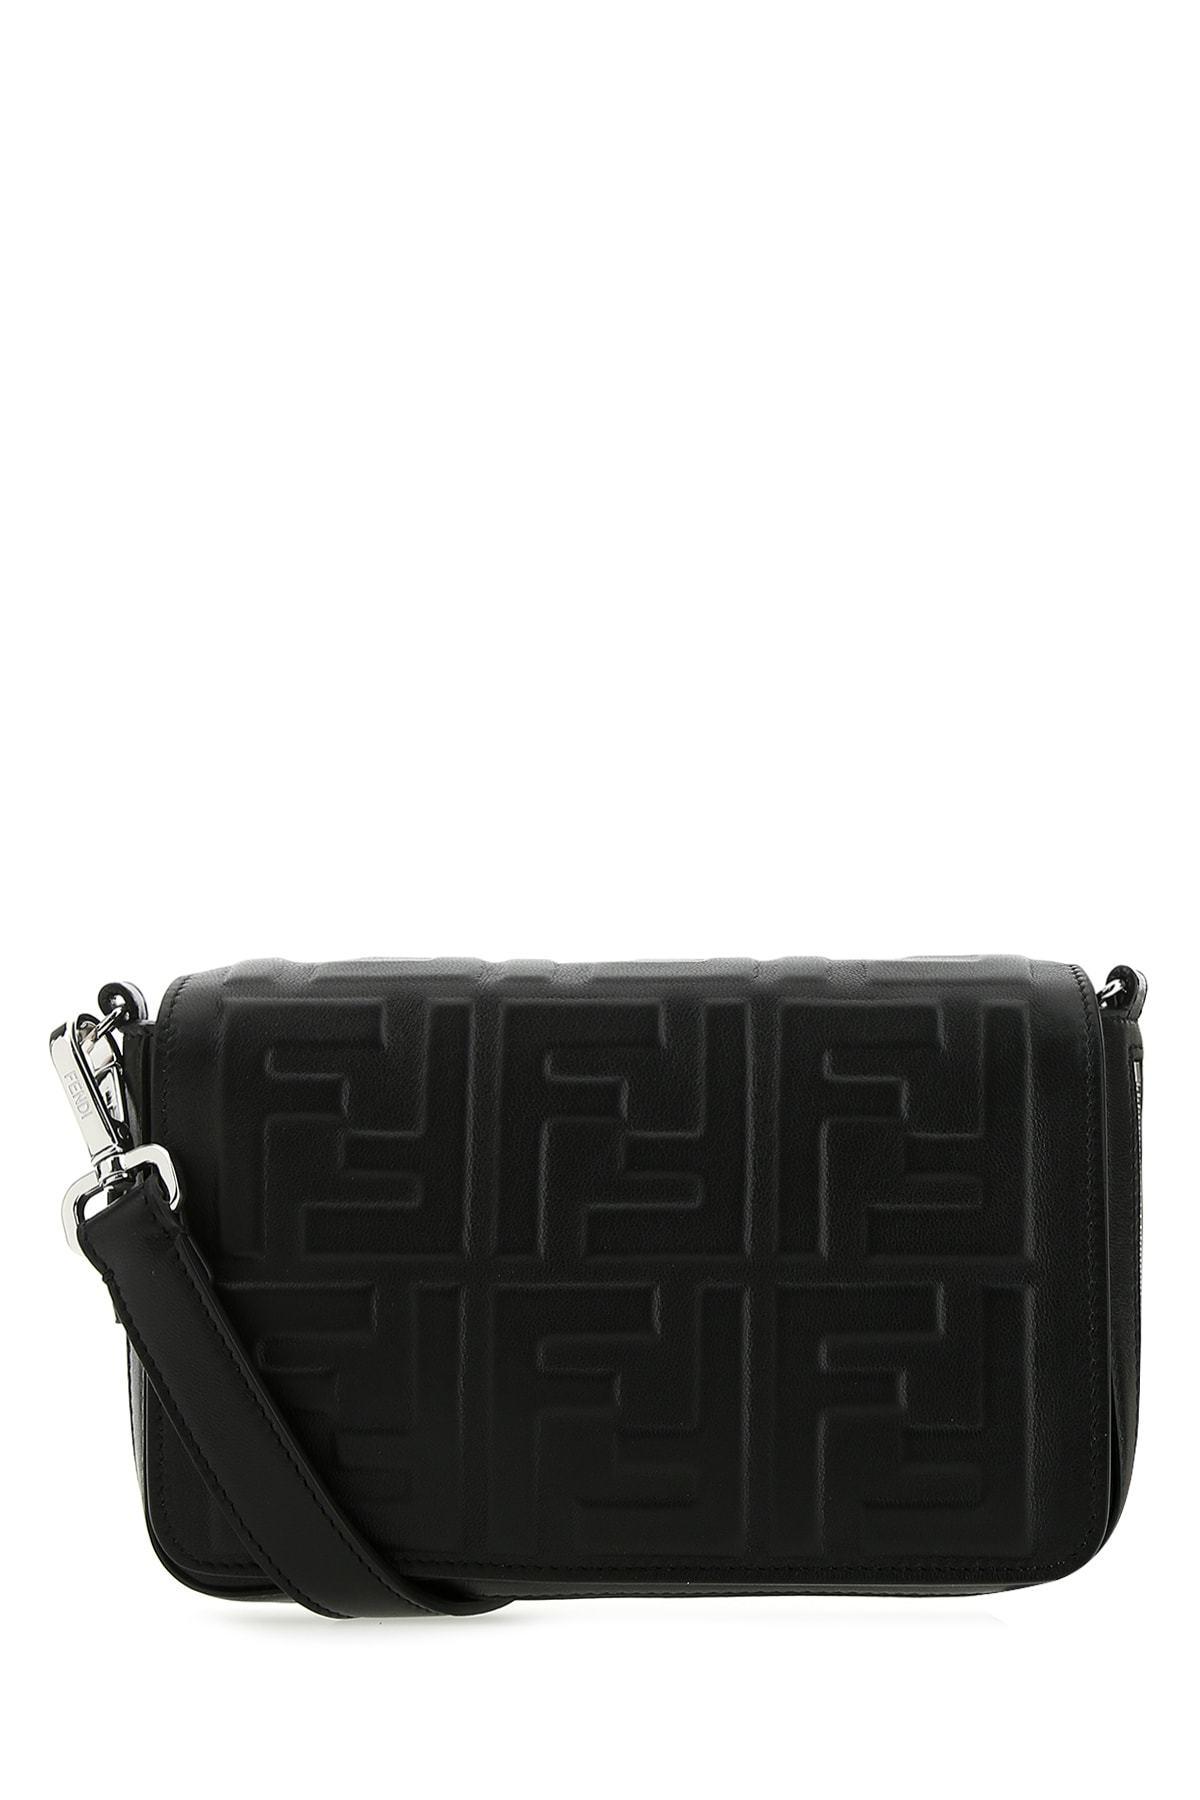 Fendi Leather Ff Embossed Camera Bag in Black - Lyst